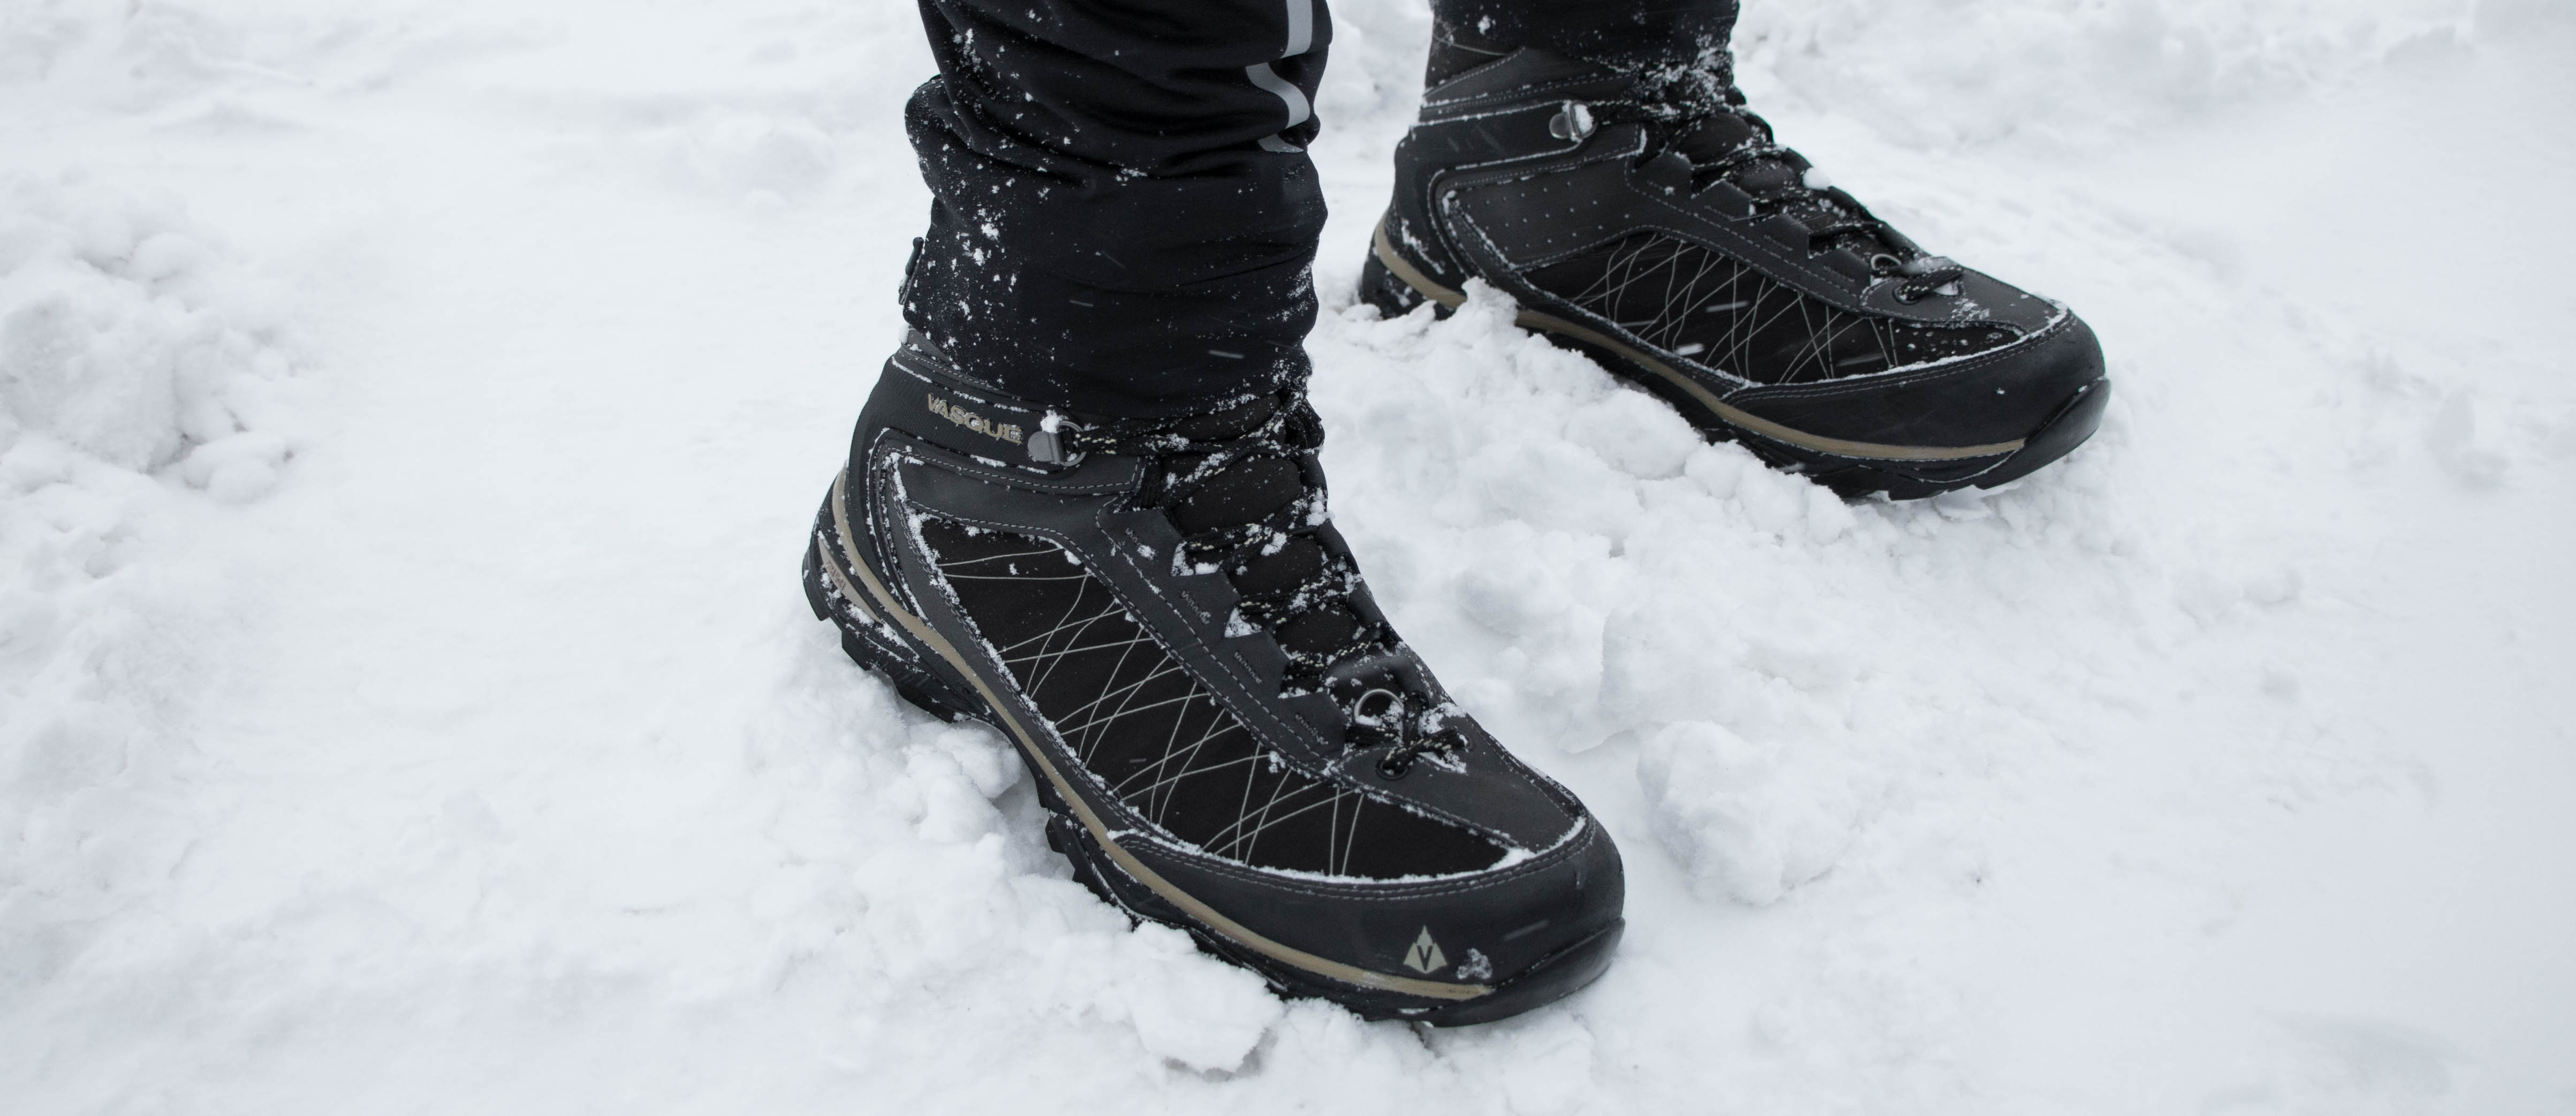 vasque coldspark ultradry snow boot